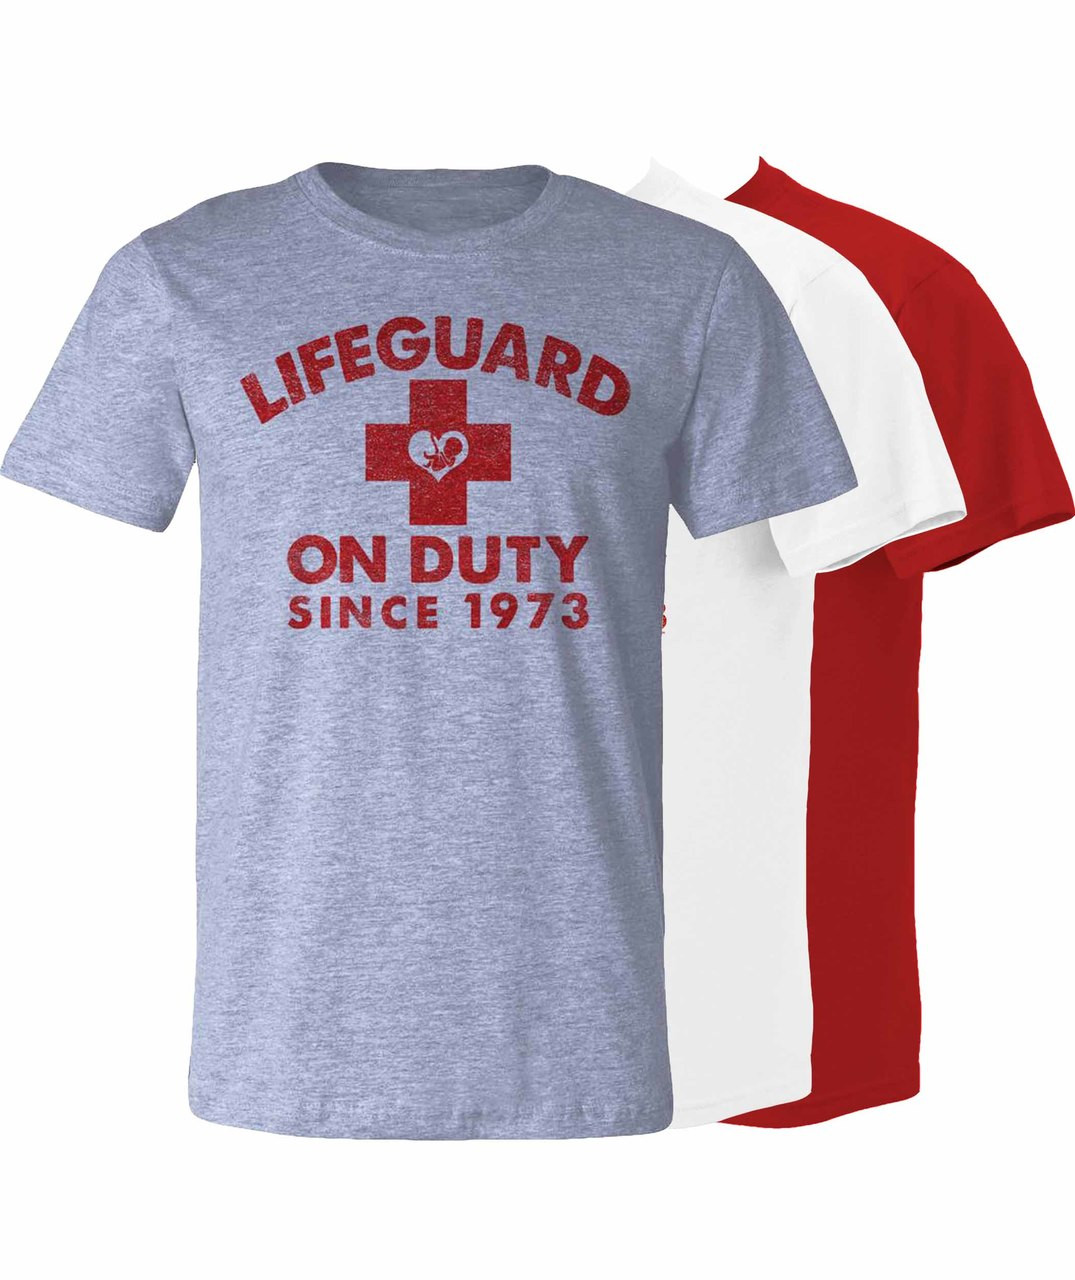 lifeguard on duty shirt